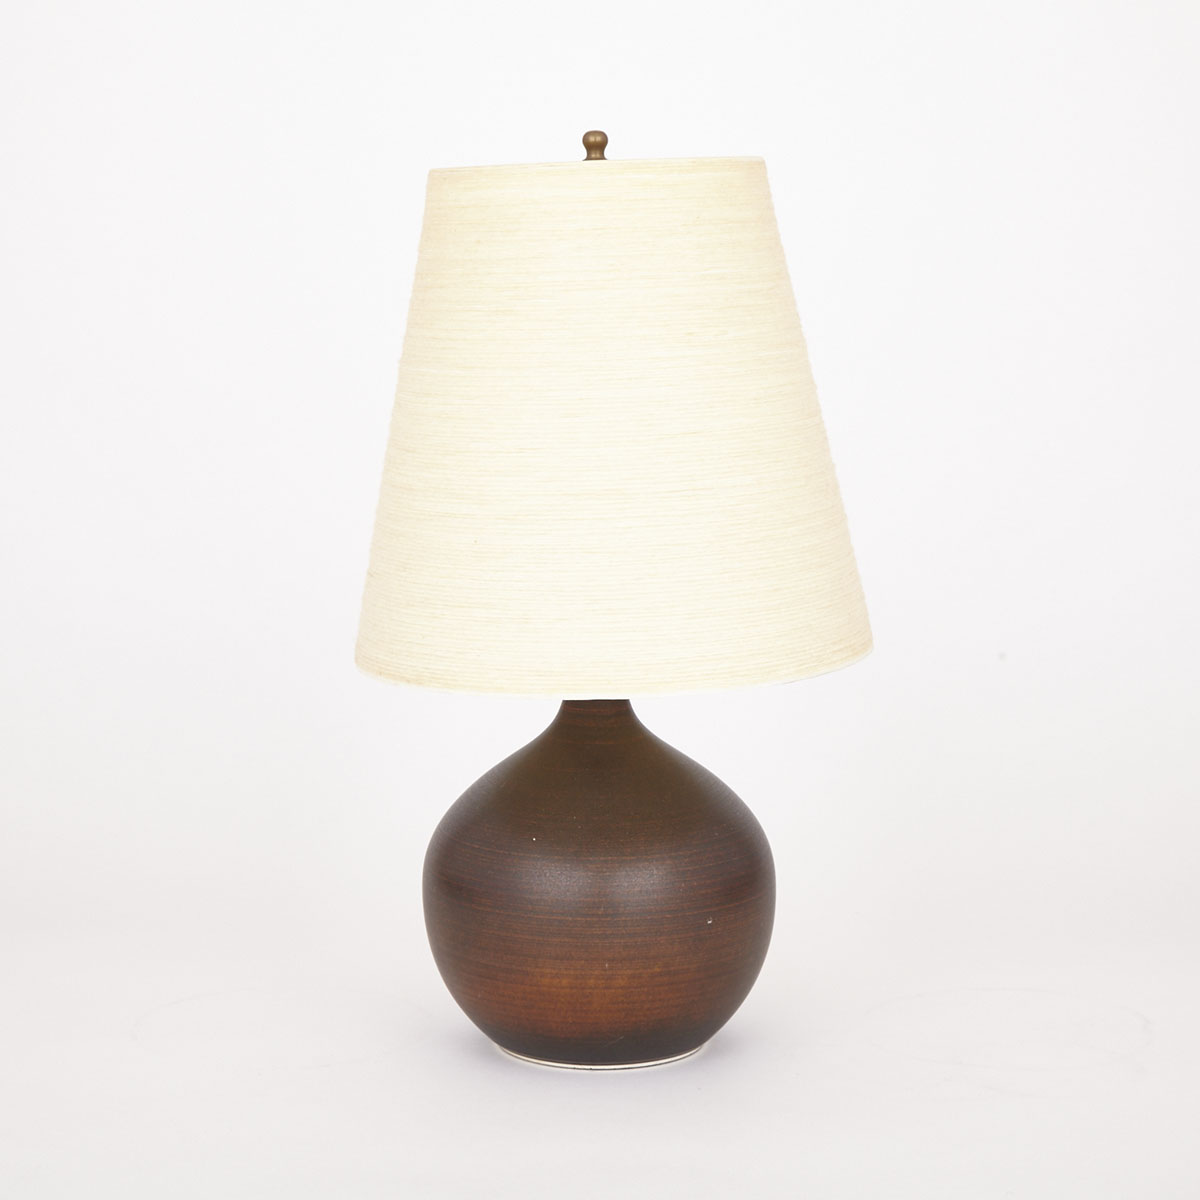 Lotte & Gunnar Bostlund Ceramic Table Lamp with Original Wool Wrapped Fiberglass Shade, mid 20th century